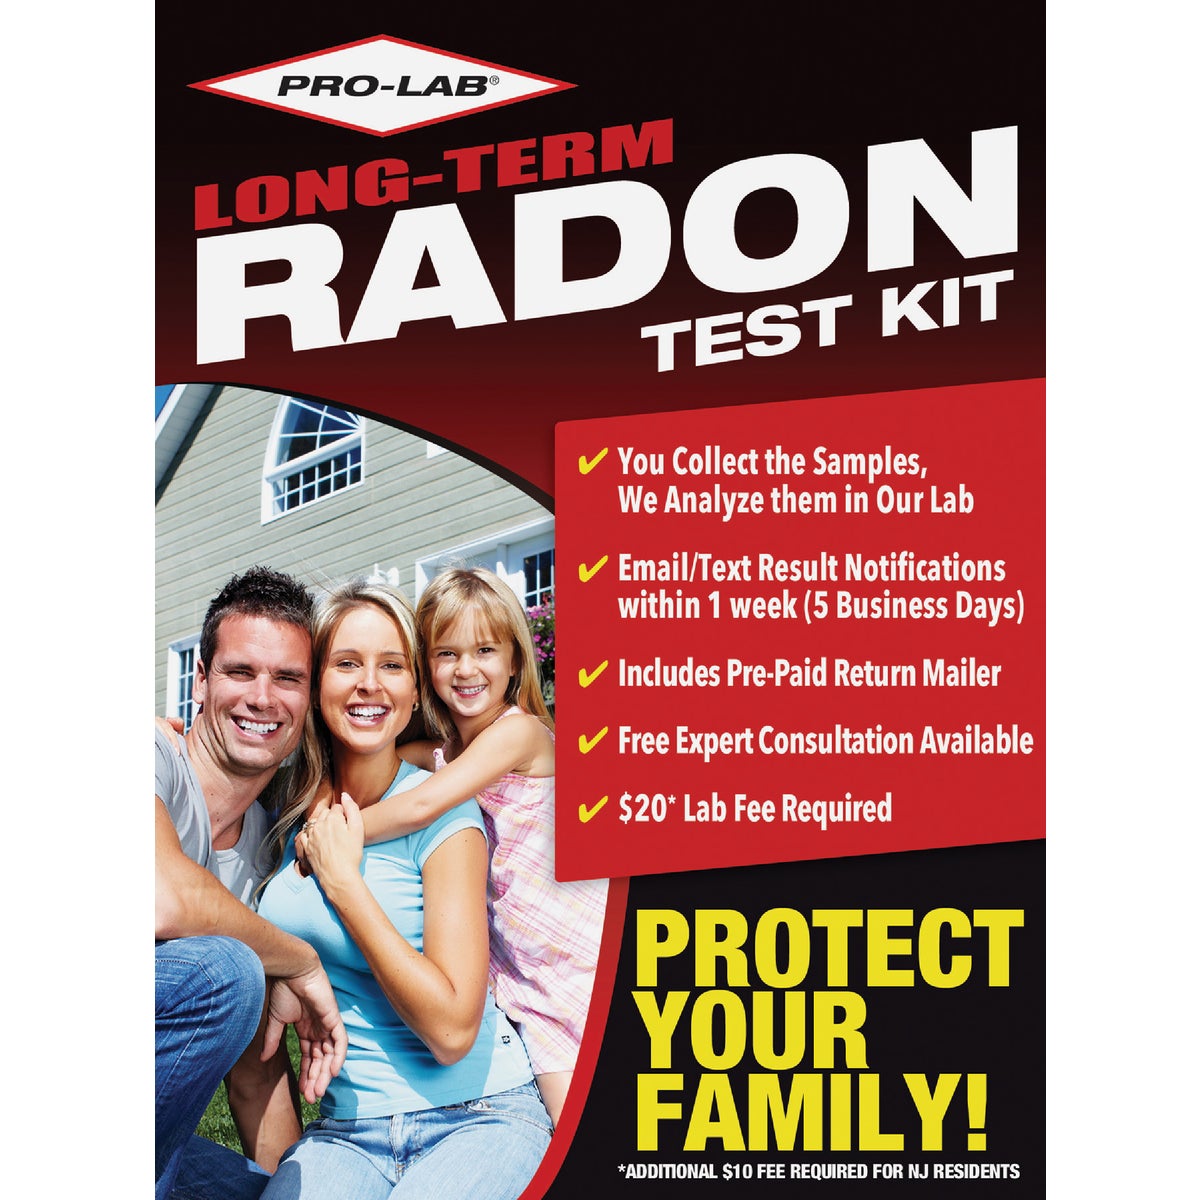 Pro Lab Long-Term Radon Test Kit